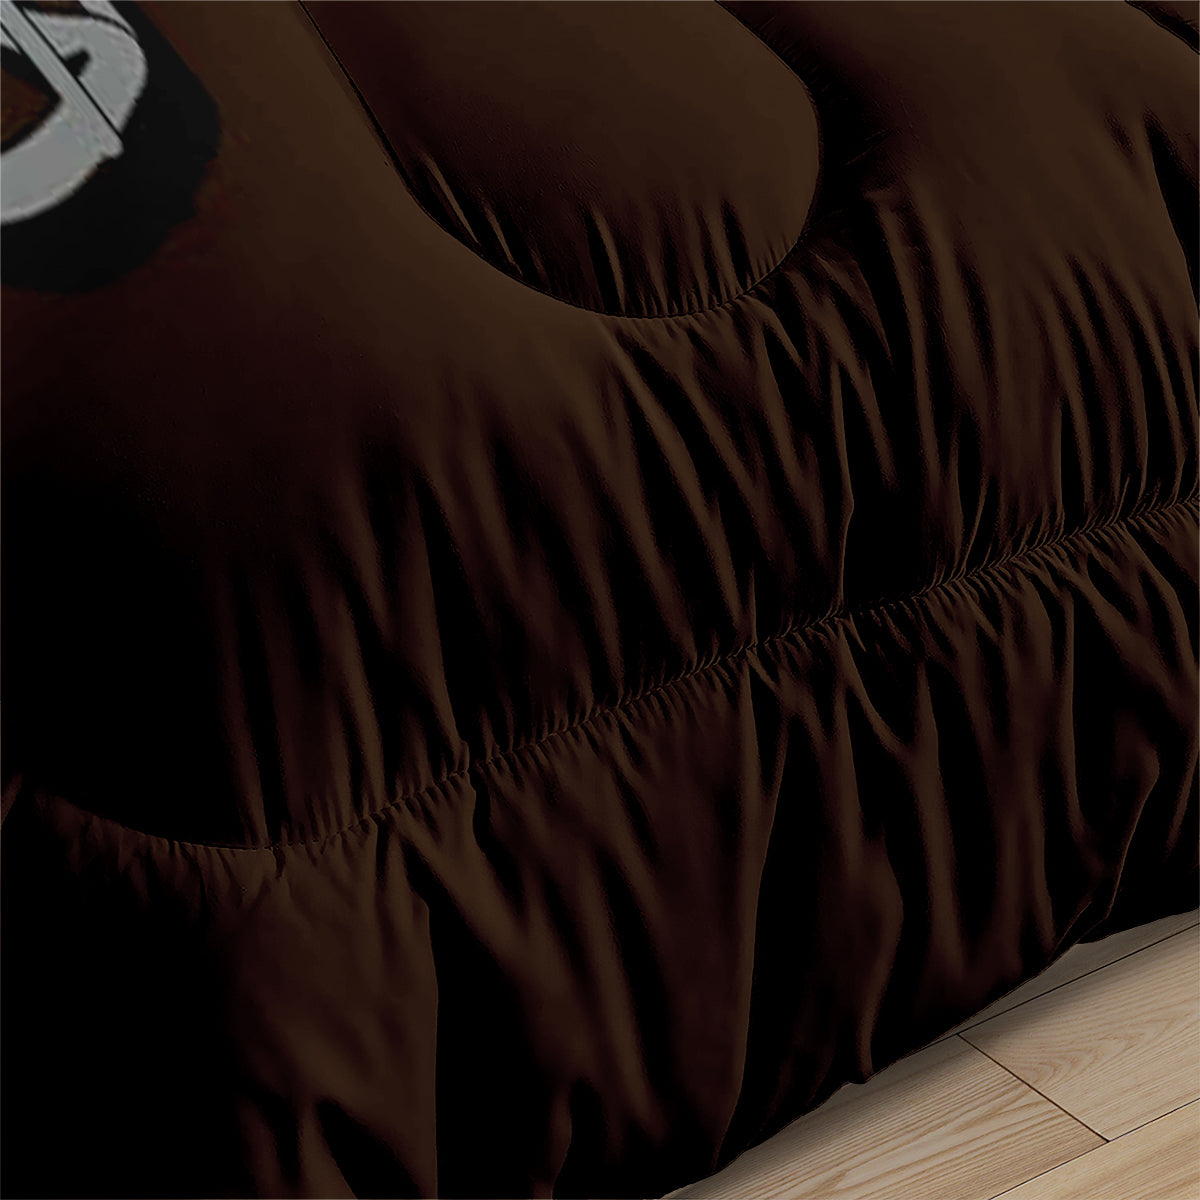 Cleveland Browns Football Team Comforter Pillowcase Sets Blanket All Season Reversible Quilted Duvet